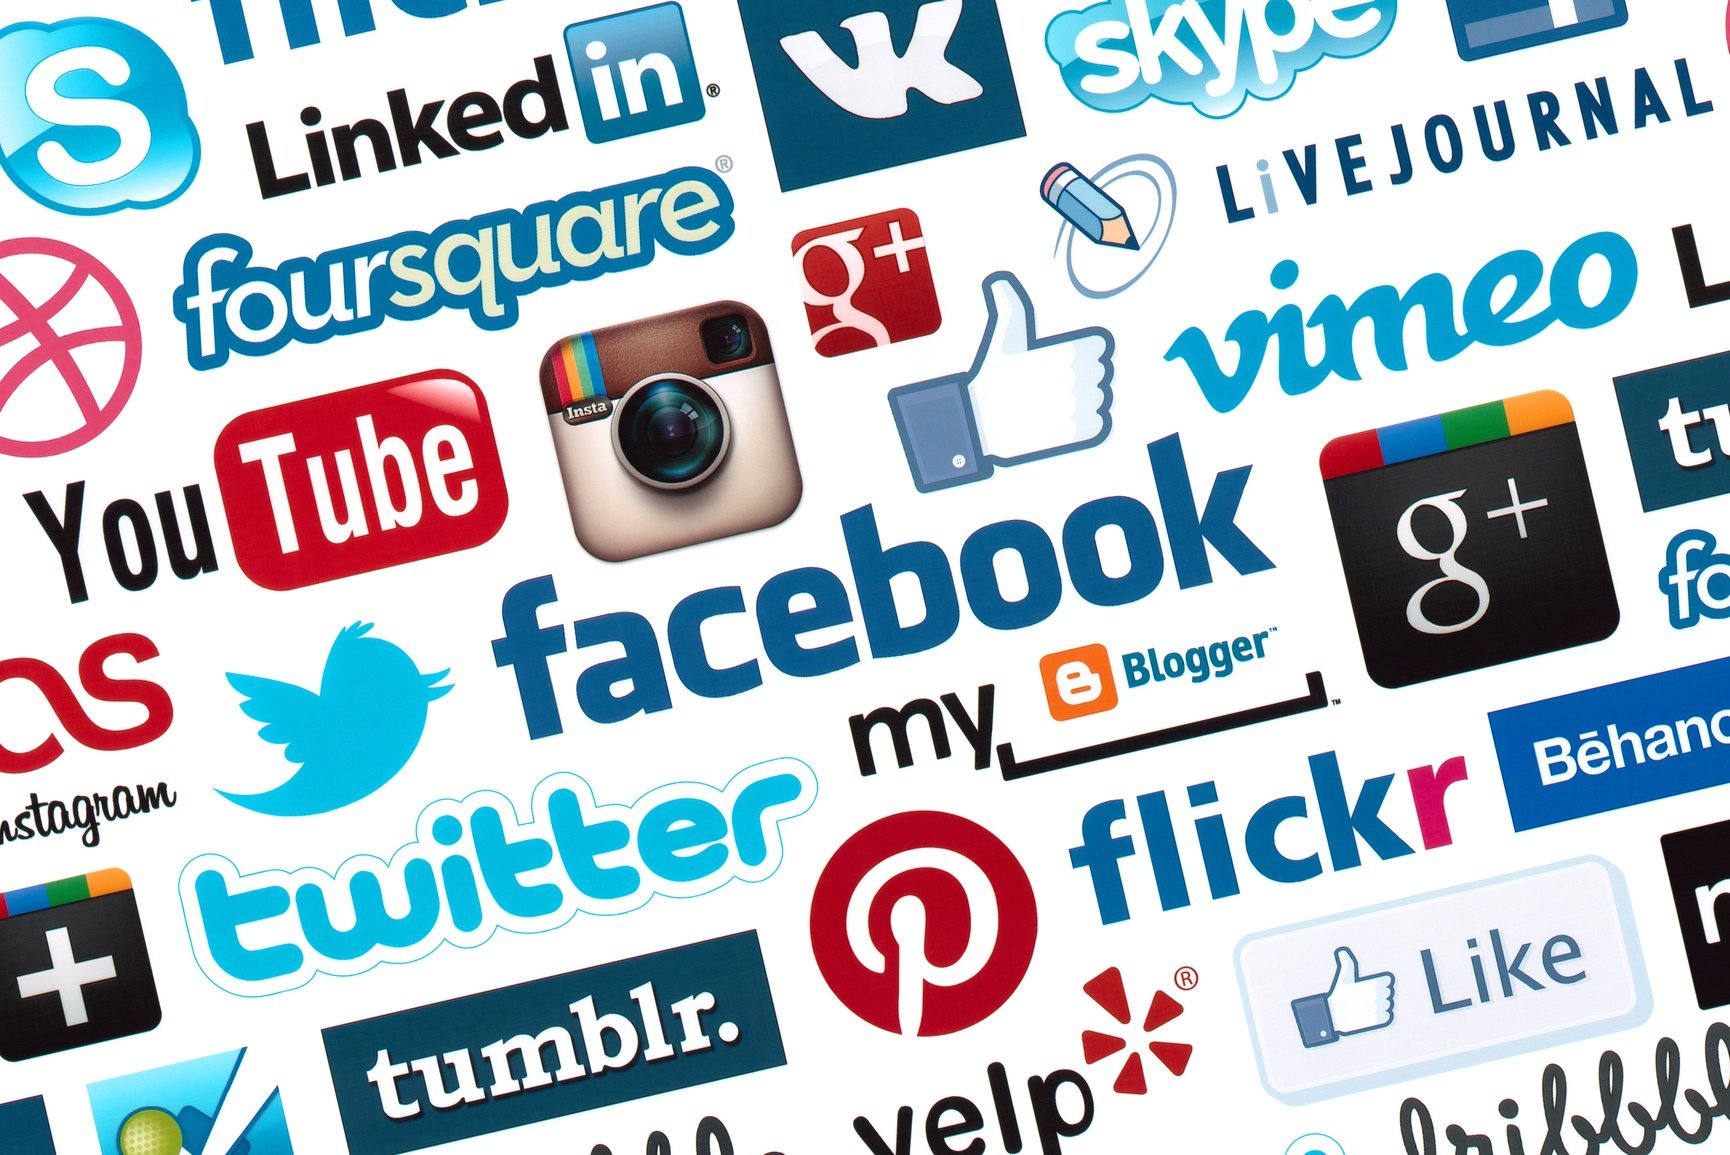 Facebook, Twitter, YouTube, and LinkedIn logos